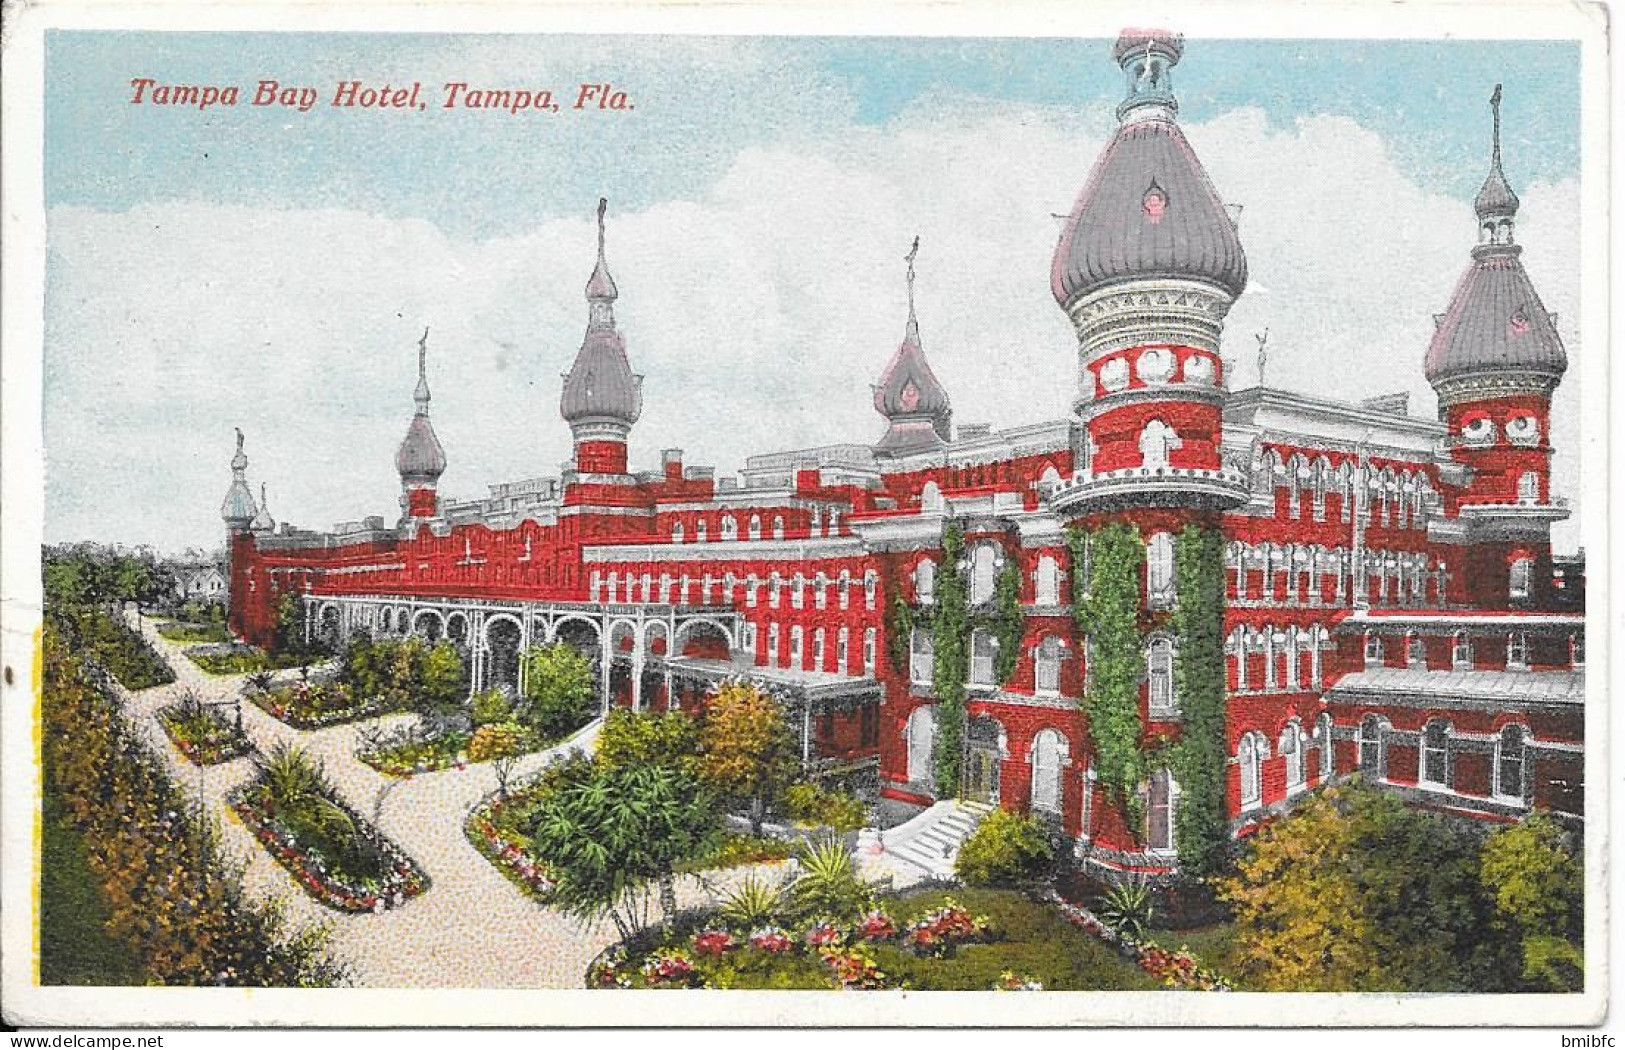 1916 - Tampa Bay Hotel, Tampa, Fla. - Tampa